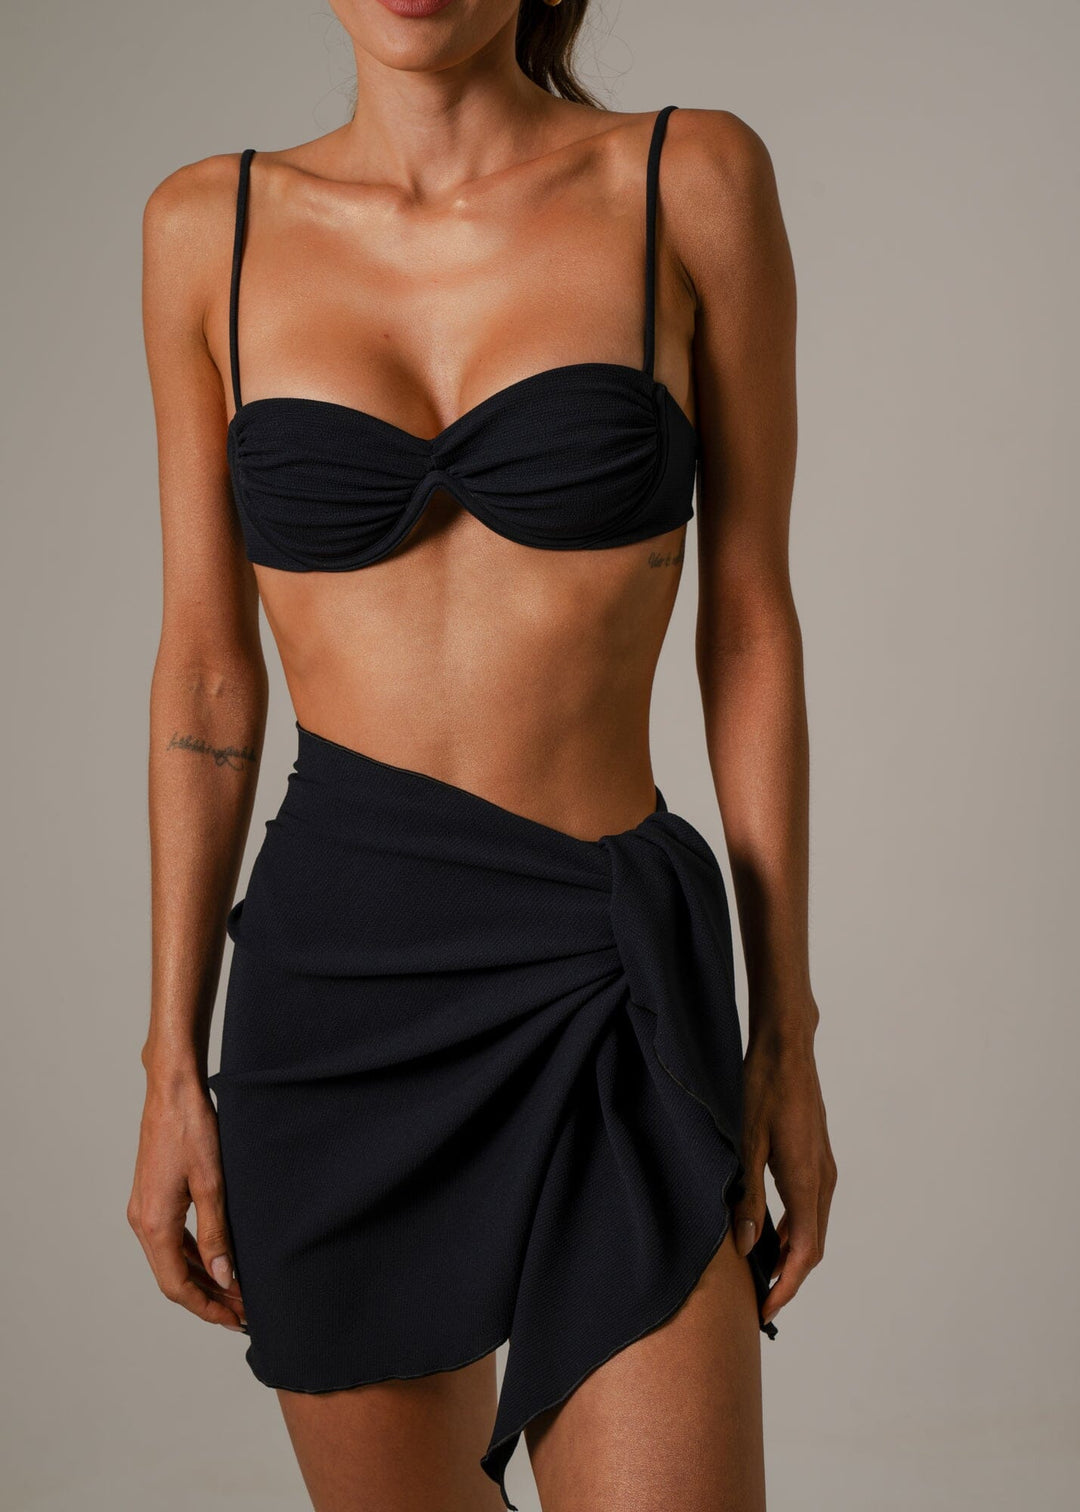 Ariel Top - Black Sand Top Naked Swimwear 